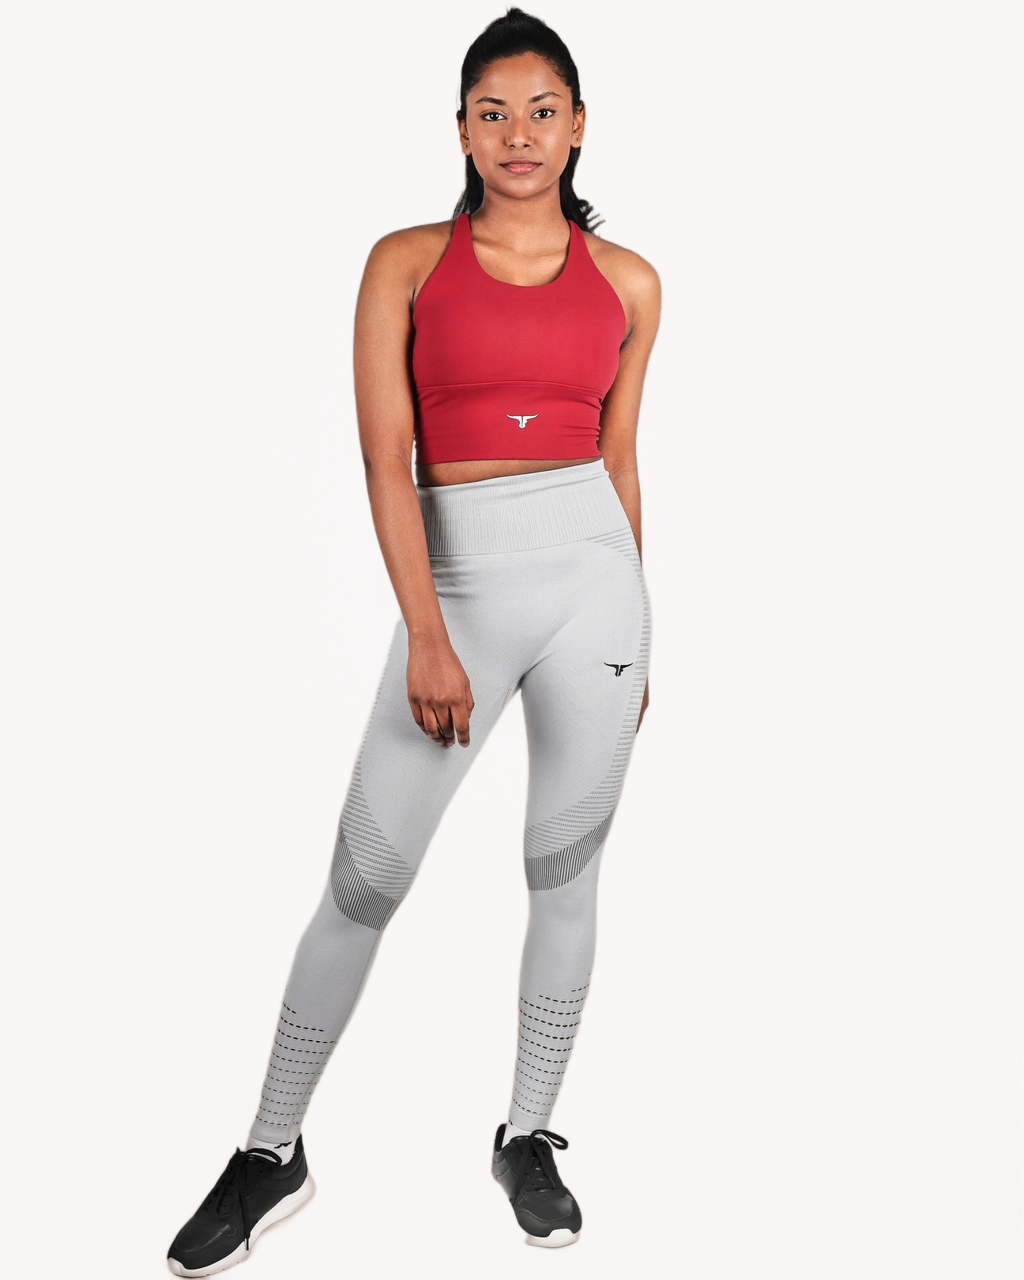 THUGFIT Long Line Sports Bra & High Waist Workout Legging Combo for Women (  Red & Grey)